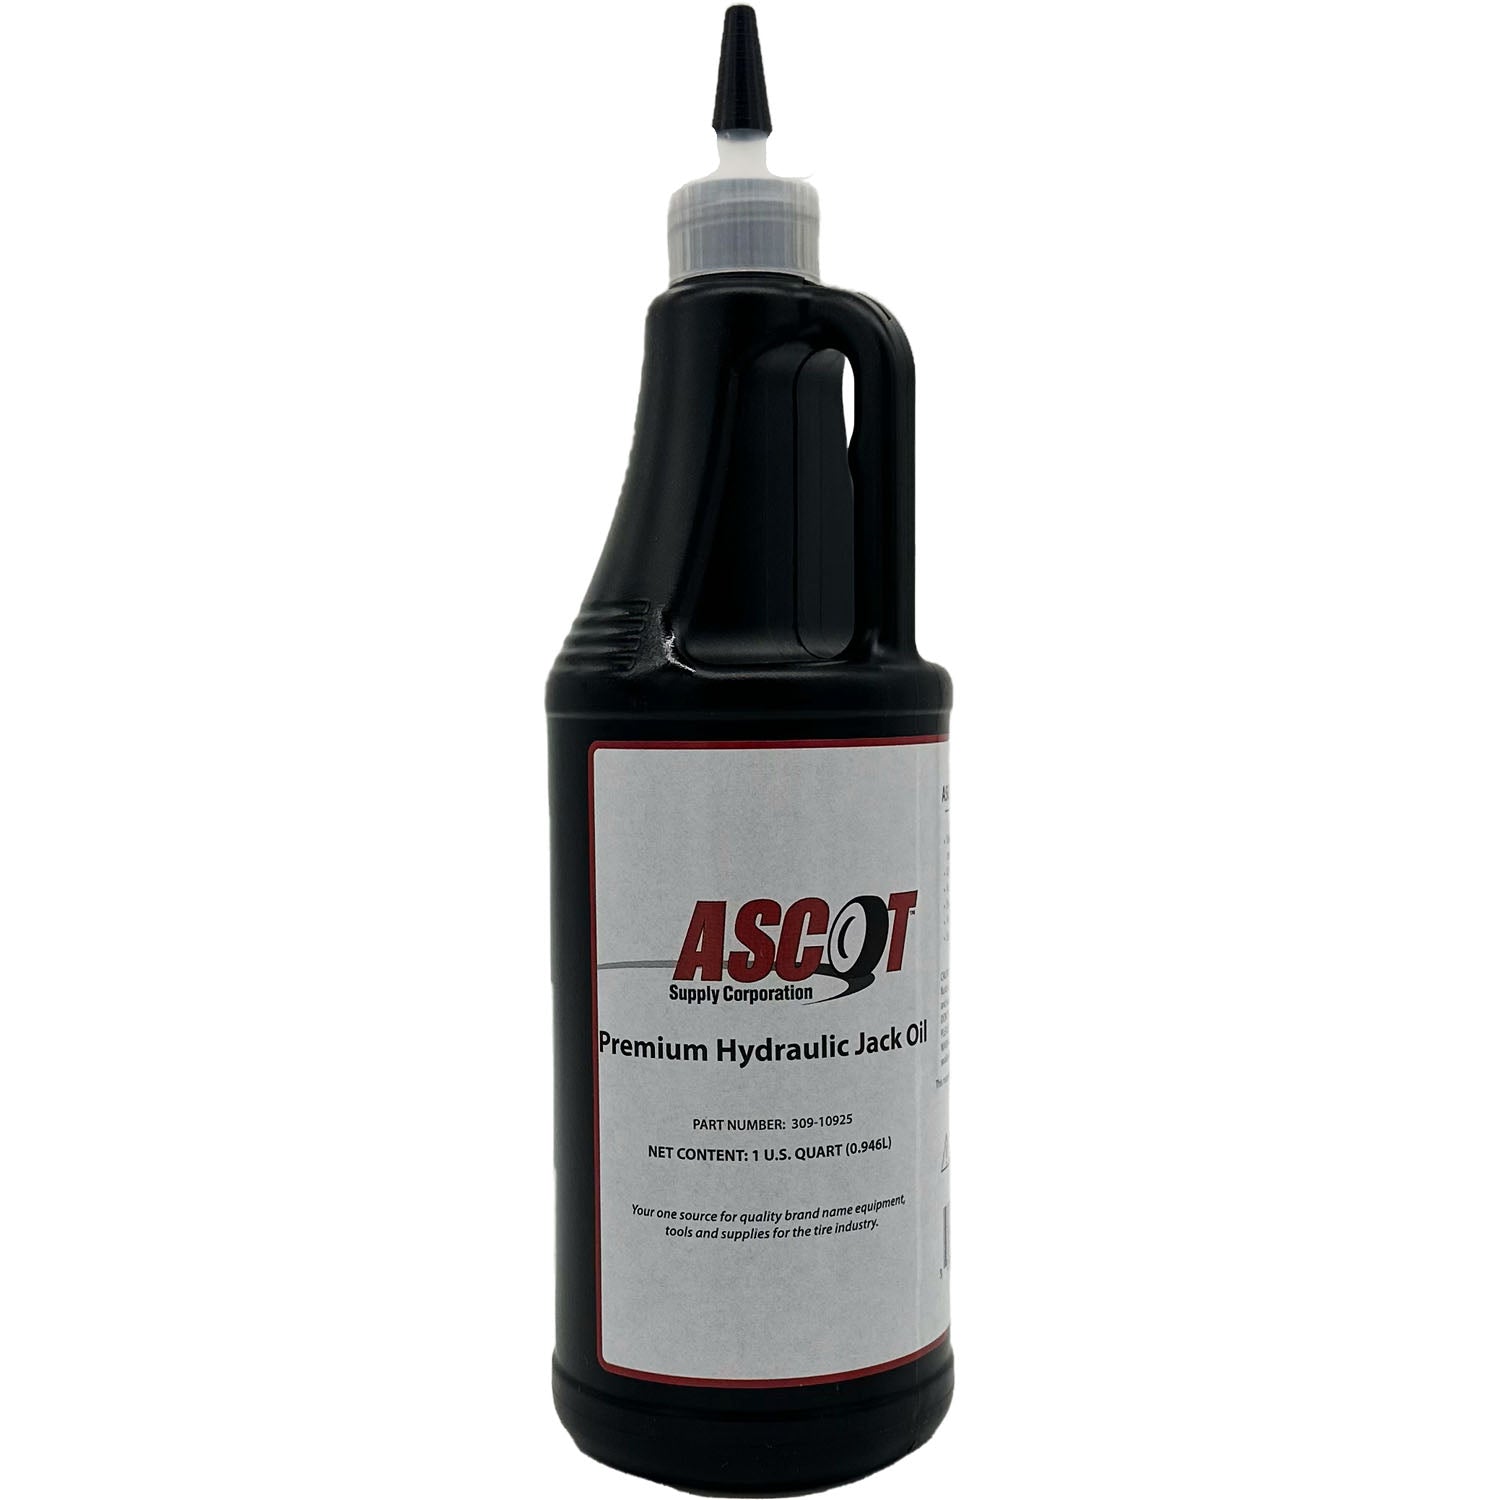 Ascot Premium Hydraulic Jack Oil 1qt